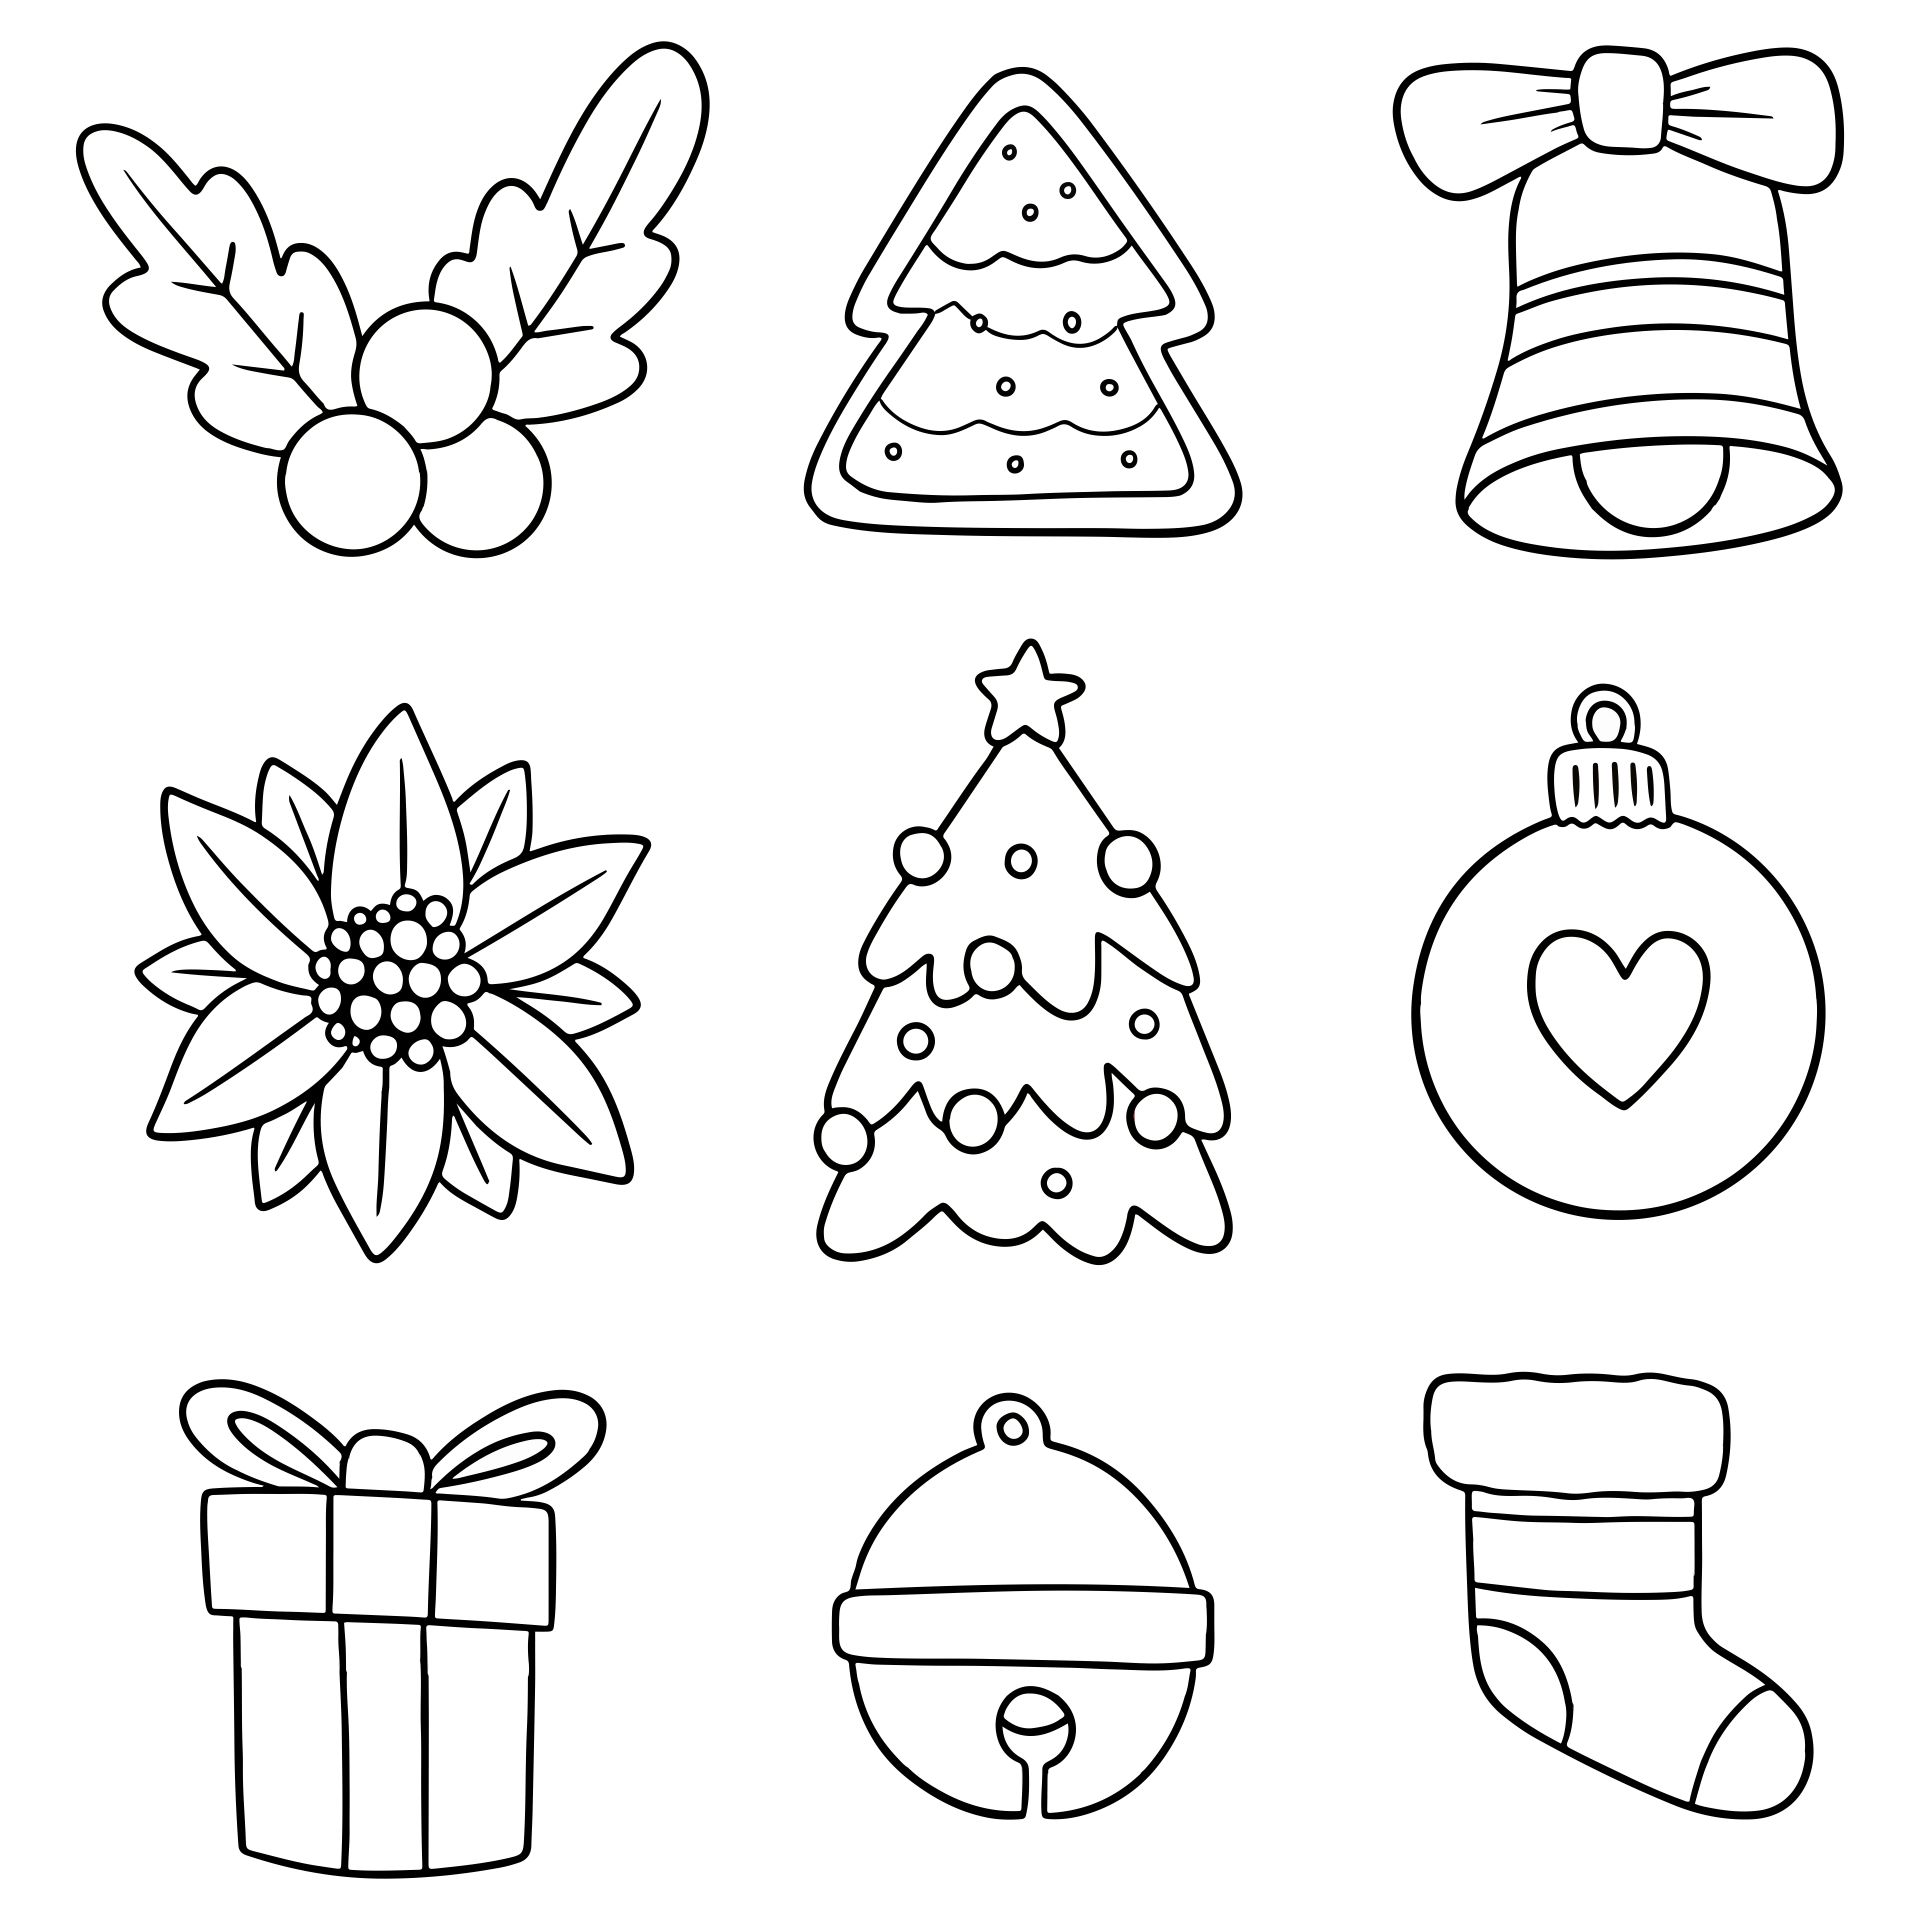 Printable Christmas Tree Ornament Patterns